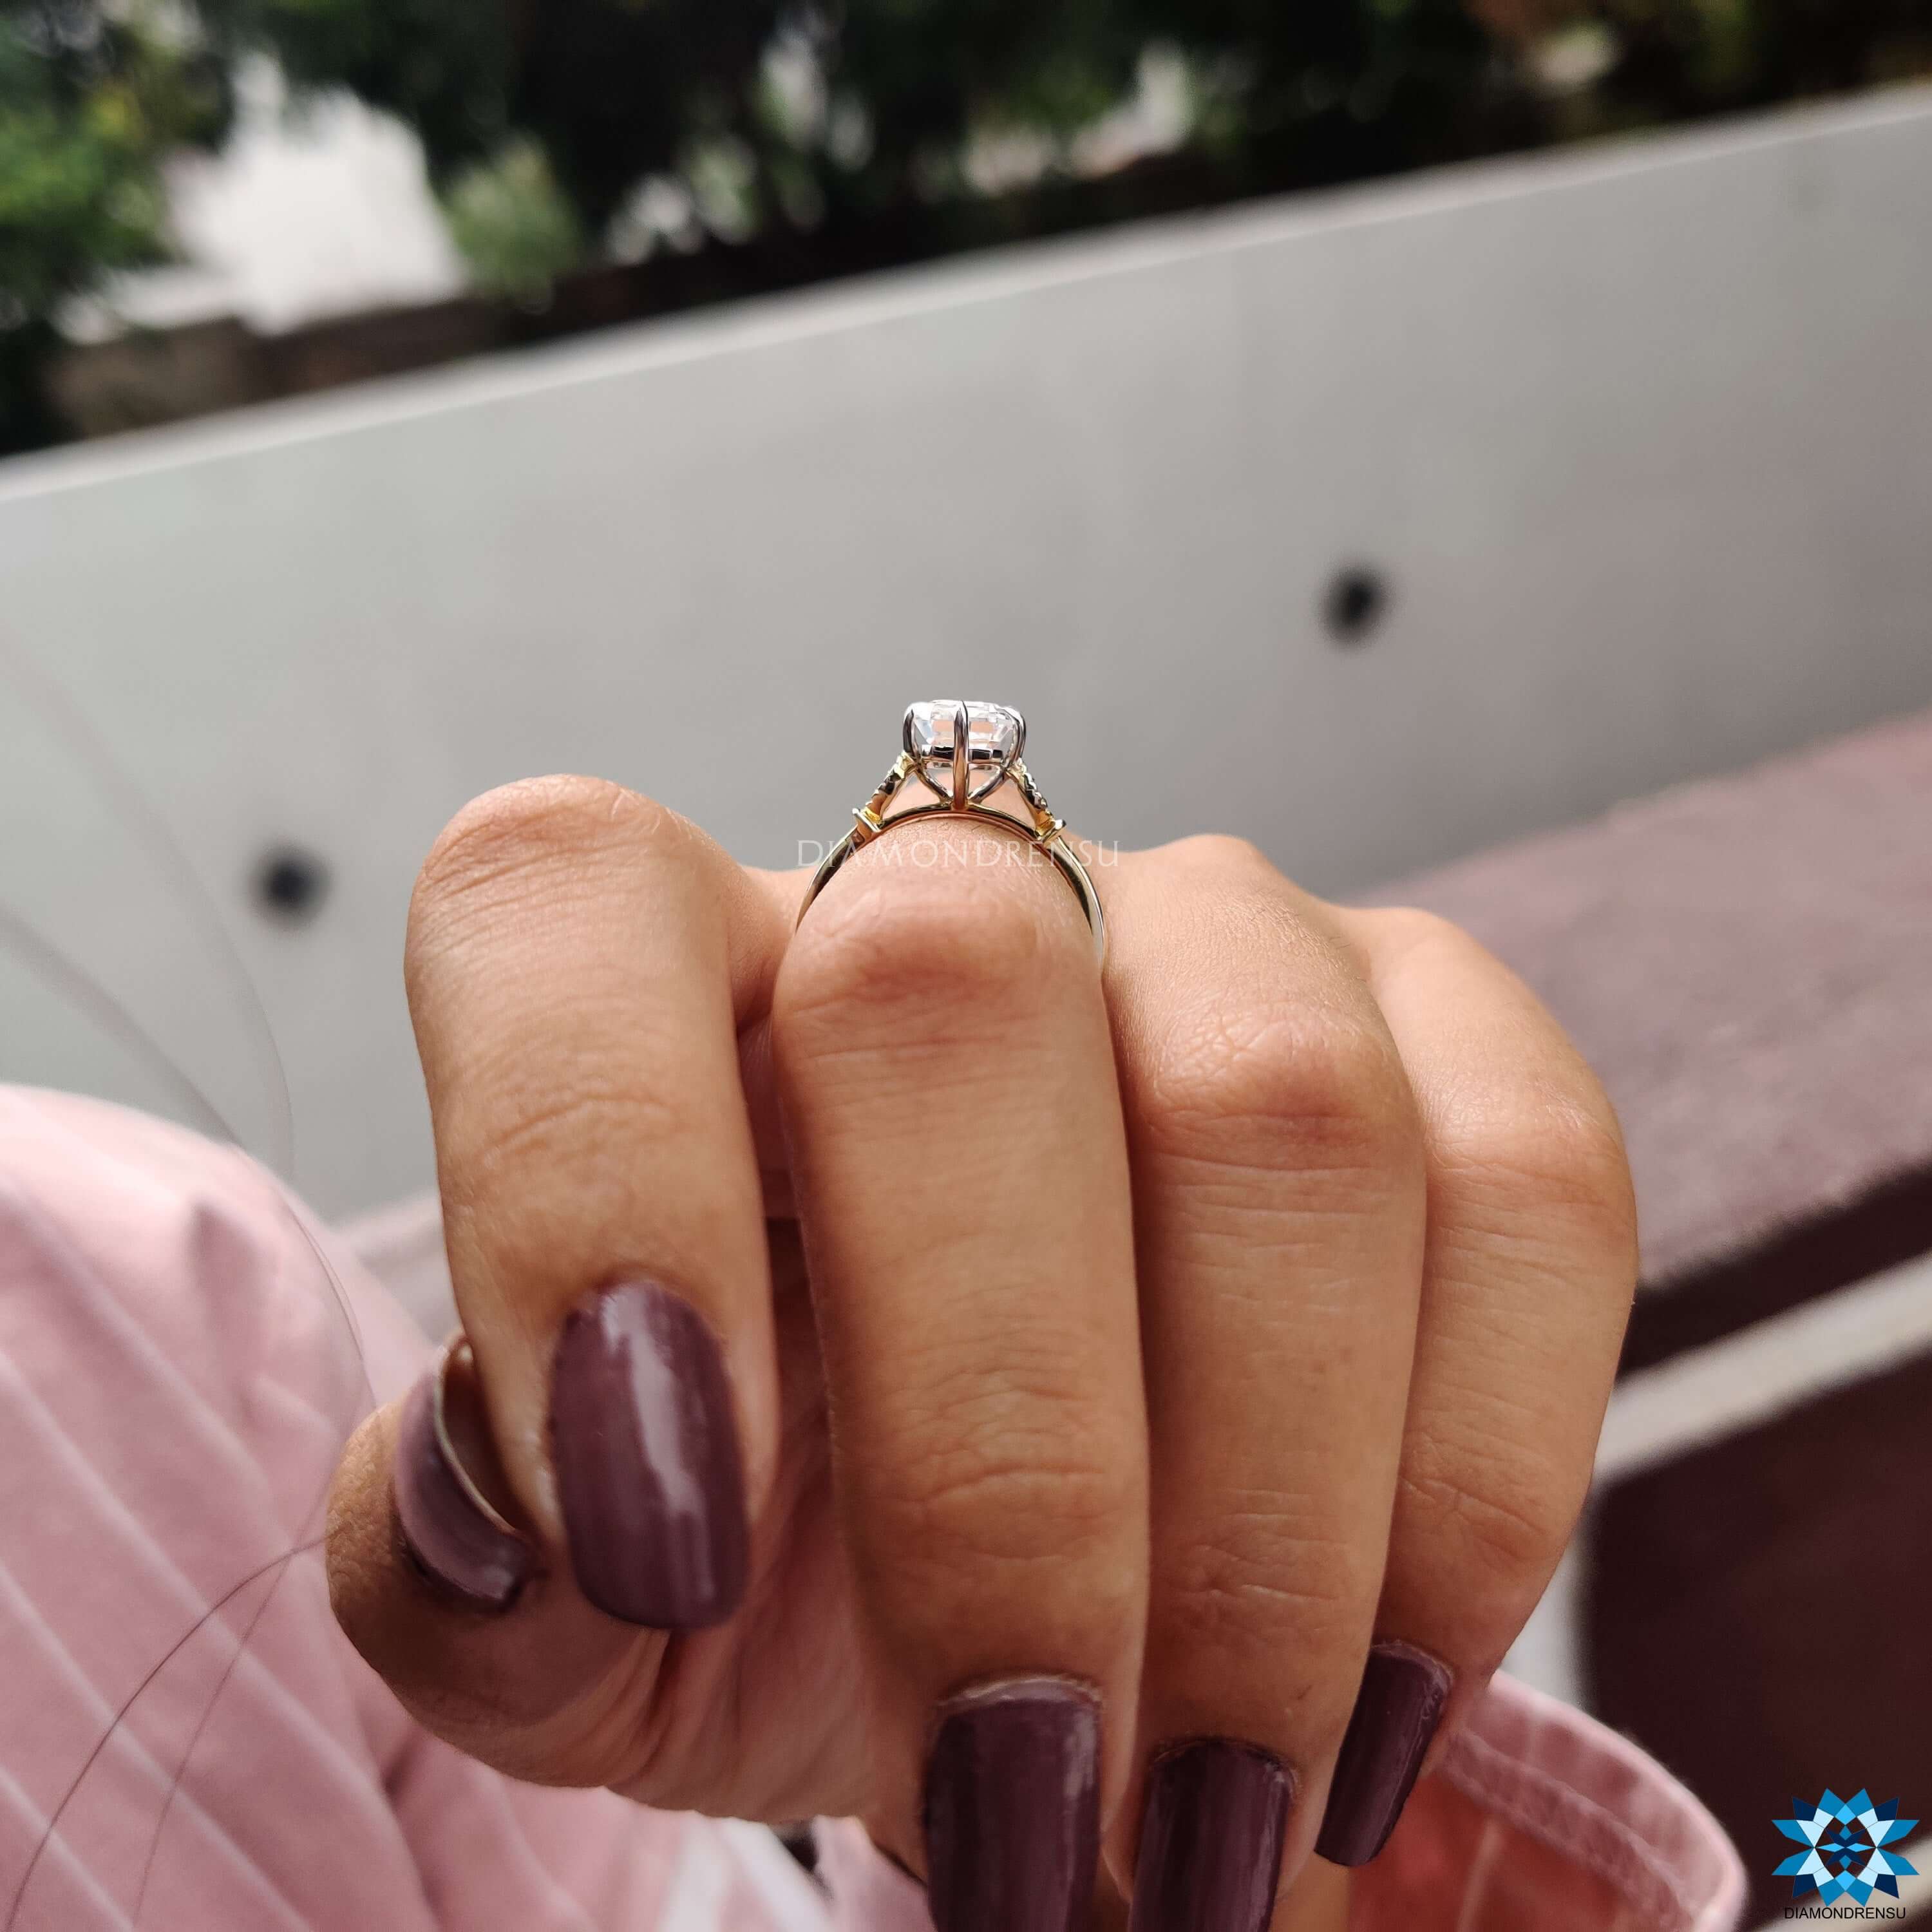 vintage moissanite engagement ring - diamondrensu